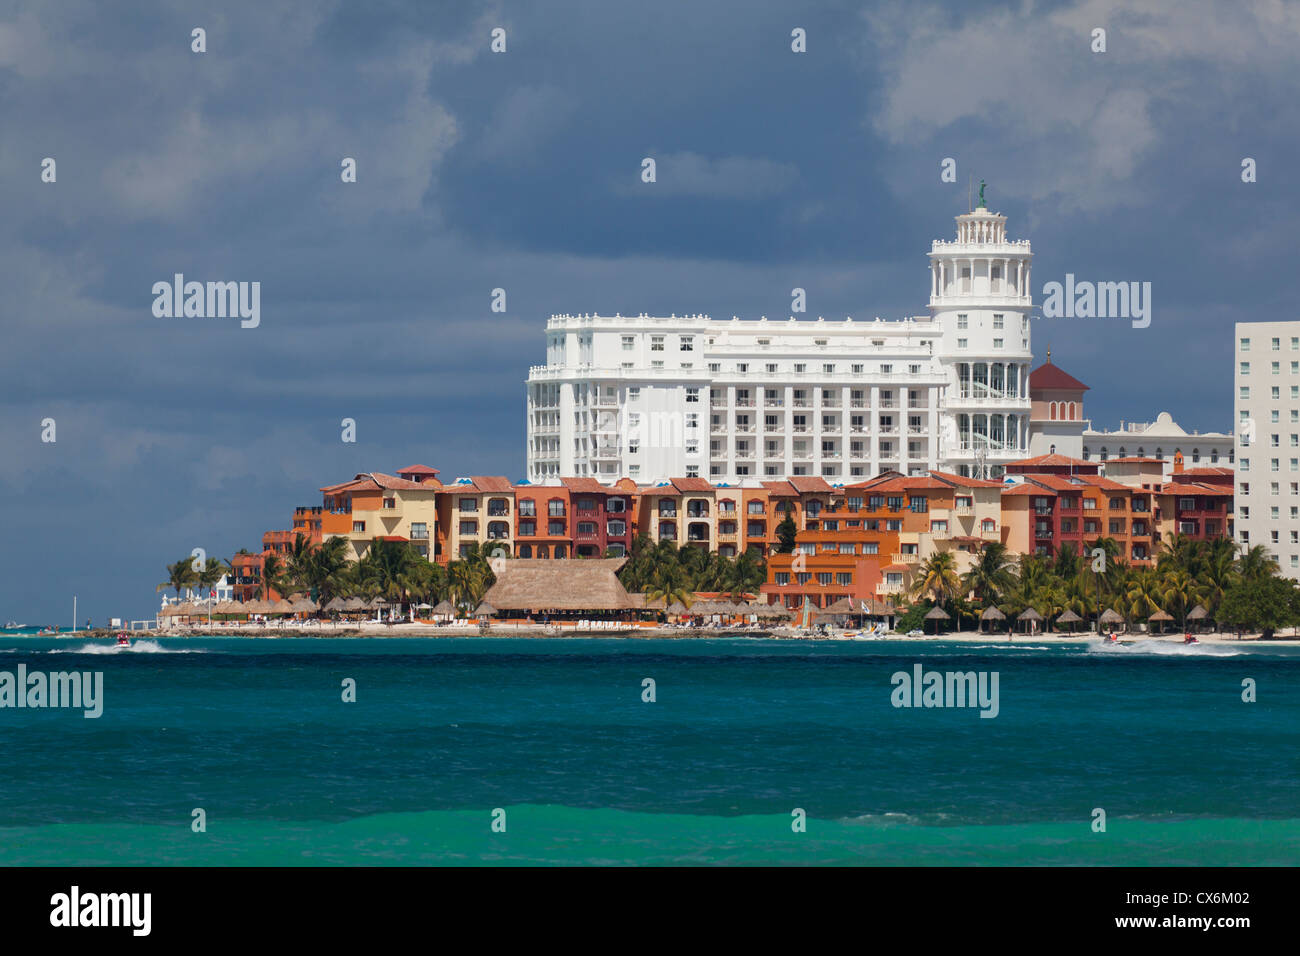 Hotel Riu Palace from Playa Tortugas, Cancun, Mexico Stock Photo